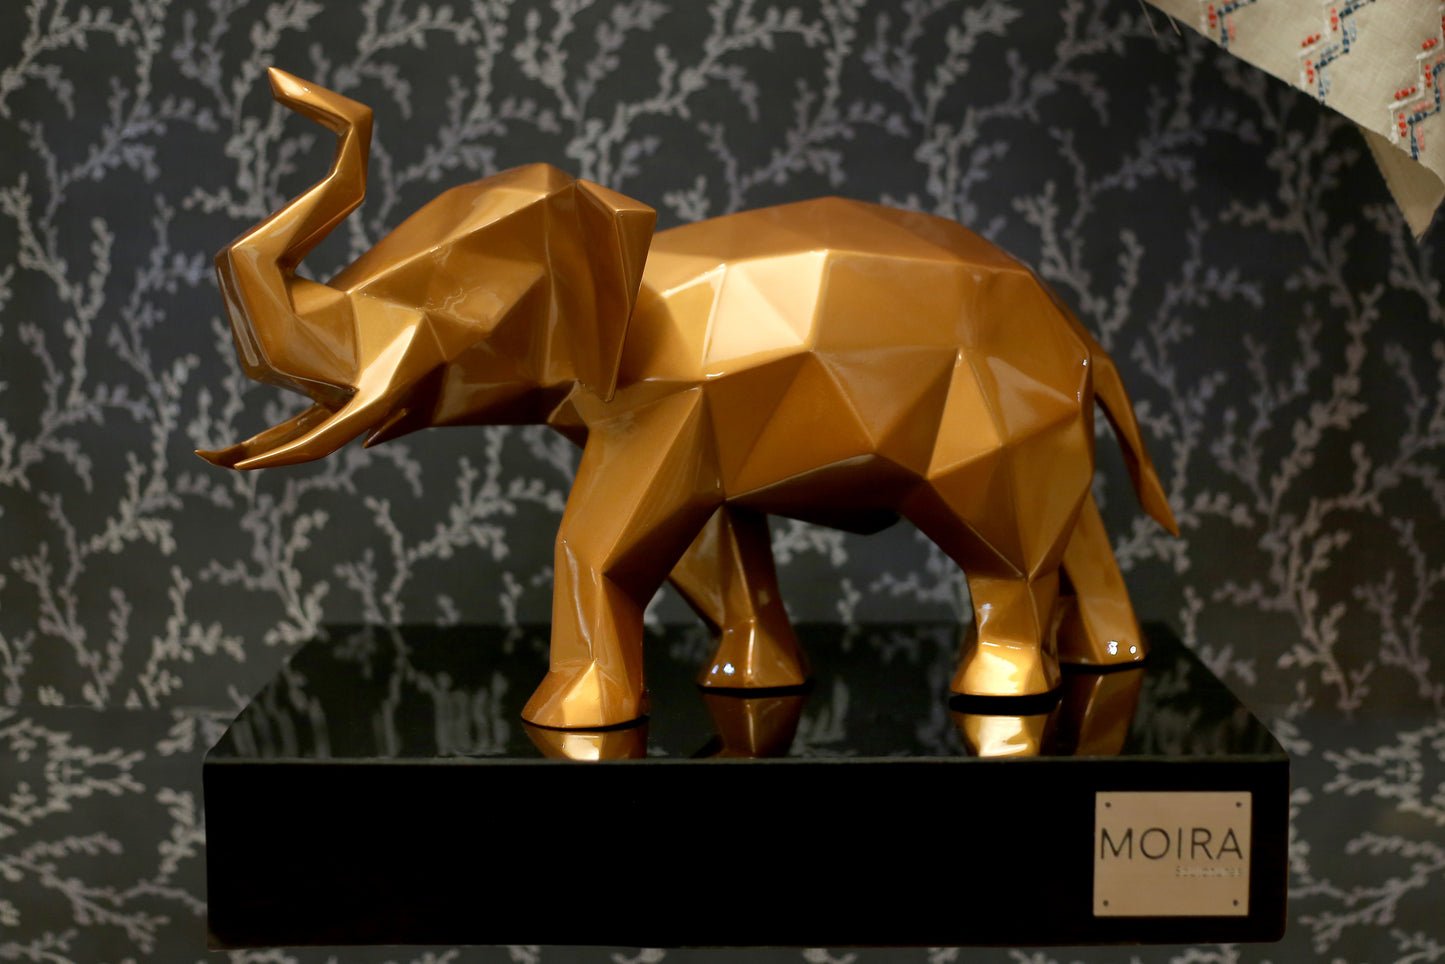 Exquisite Elephant - Gold & Copper